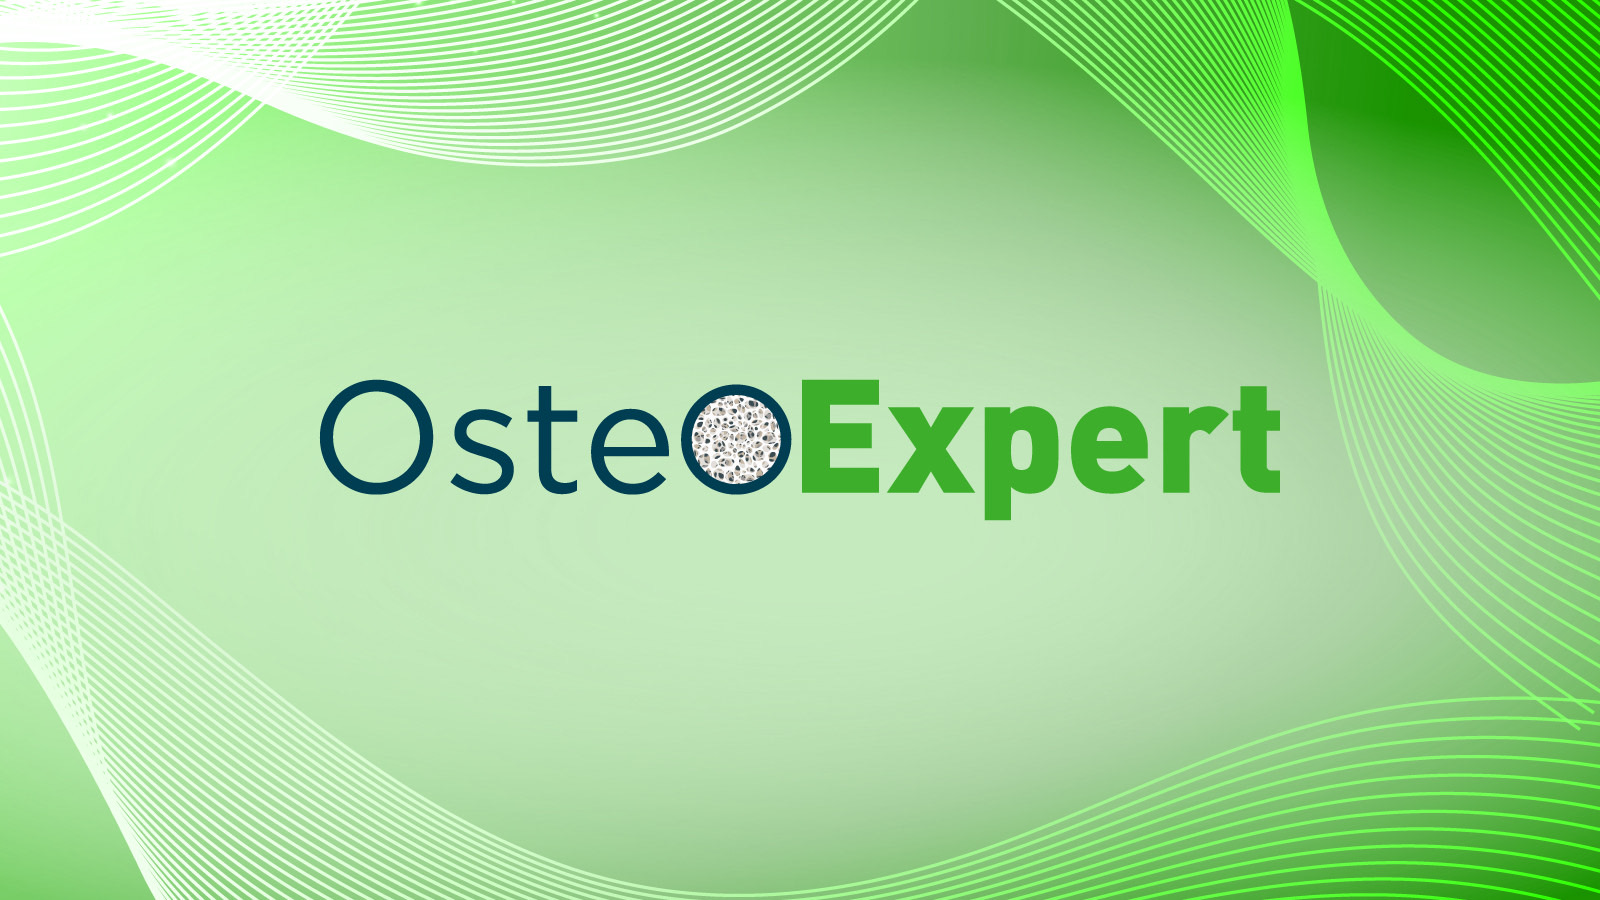 Osteoexpert